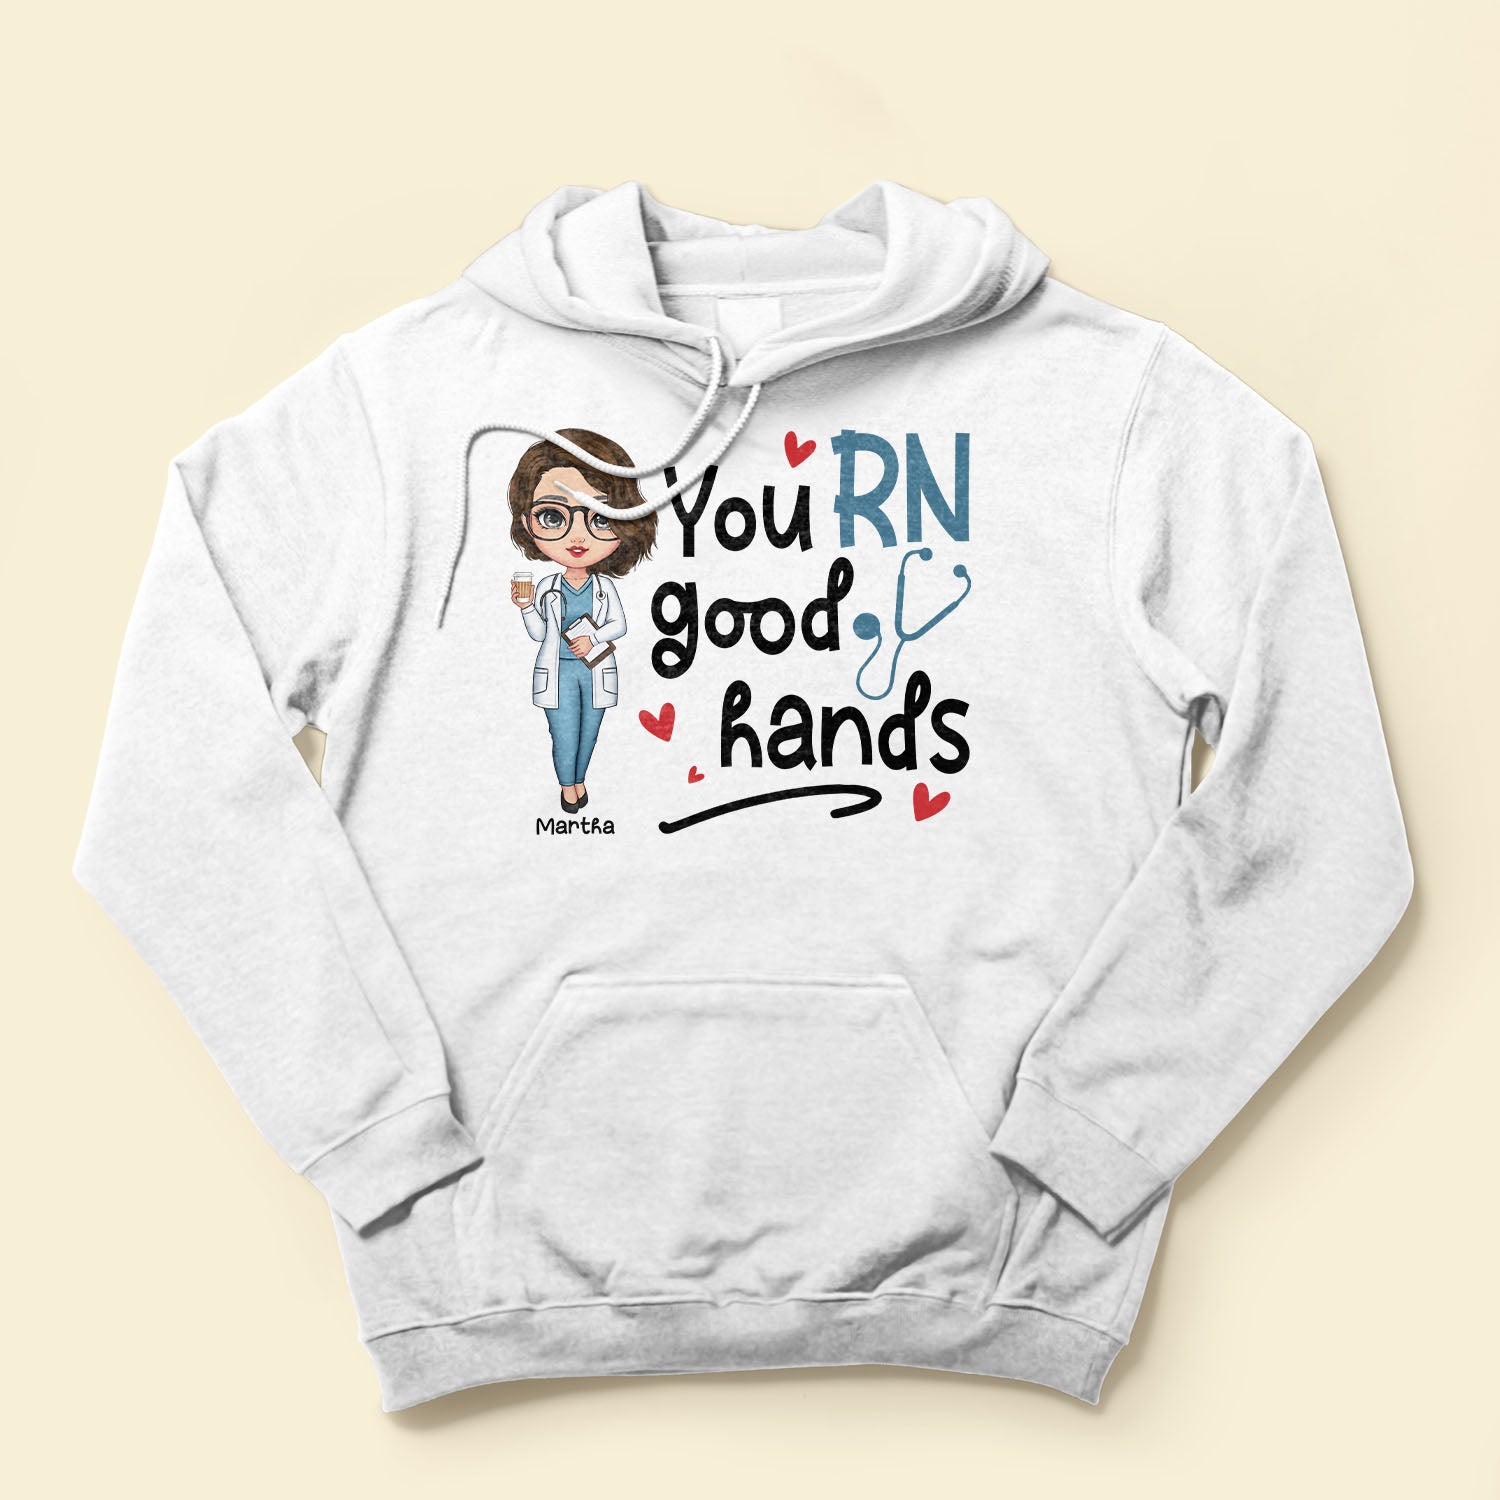 You Rn Good Hands - Personalized Shirt - Birthday, Loving, Nurse Week Gift For Nurse, Rn